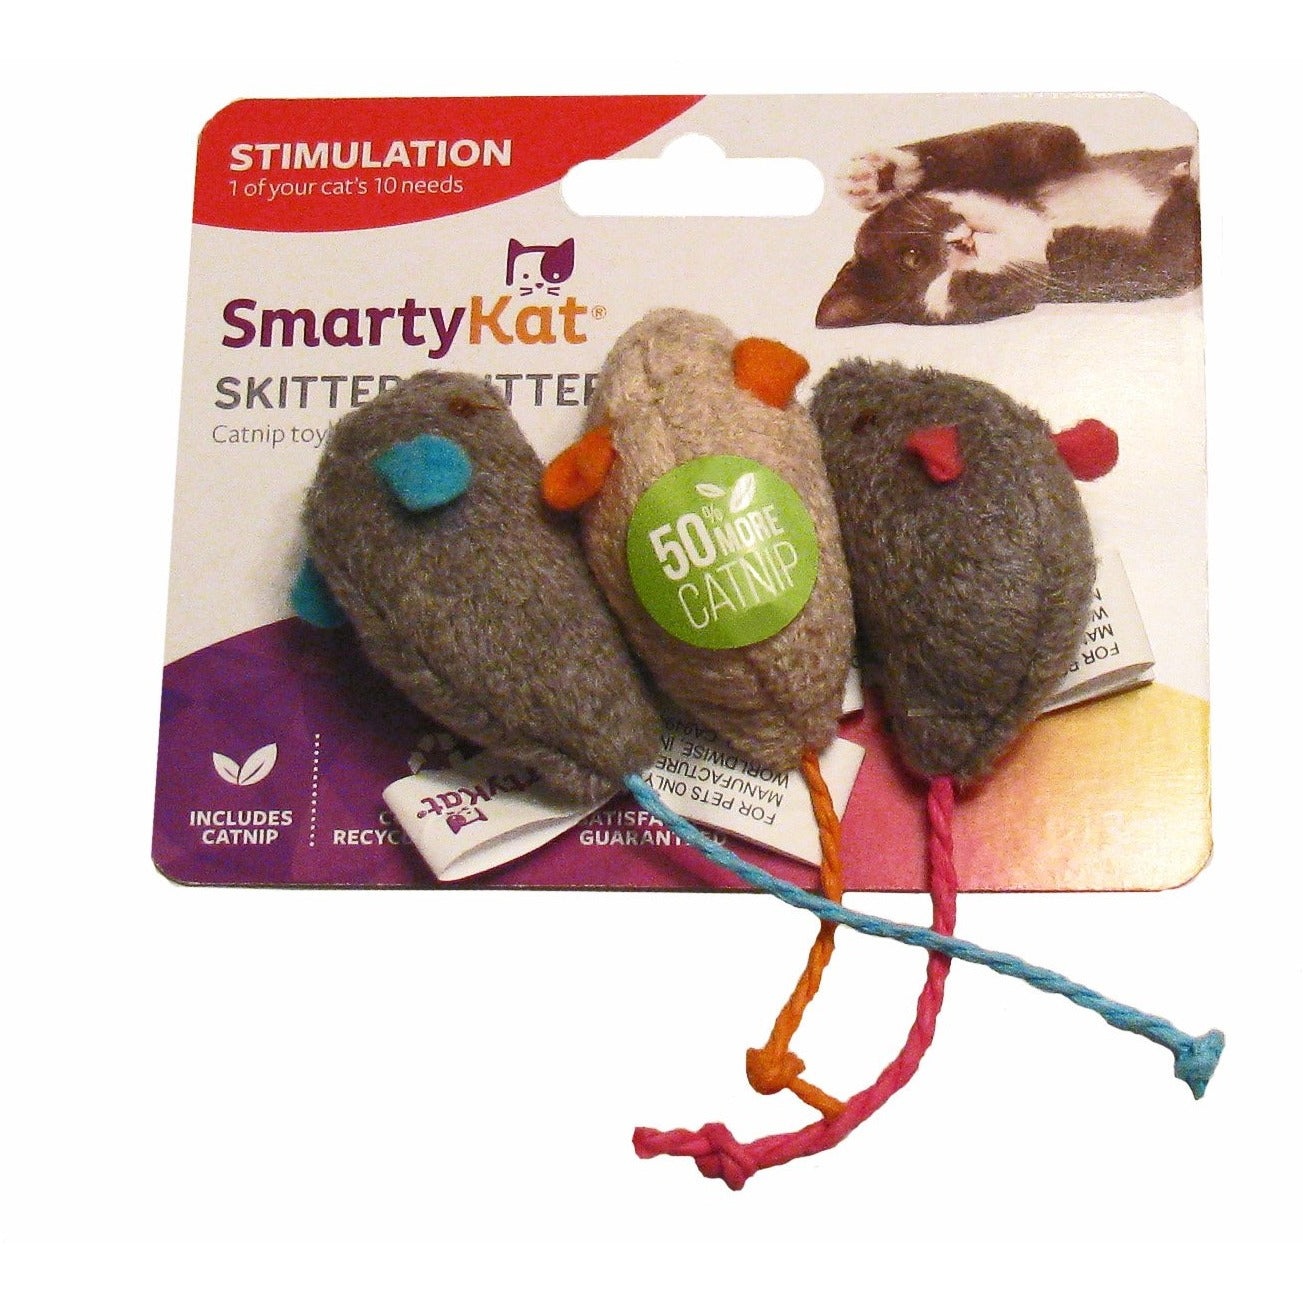 SmartyKat Skitter Critters Catnip Toy Mice